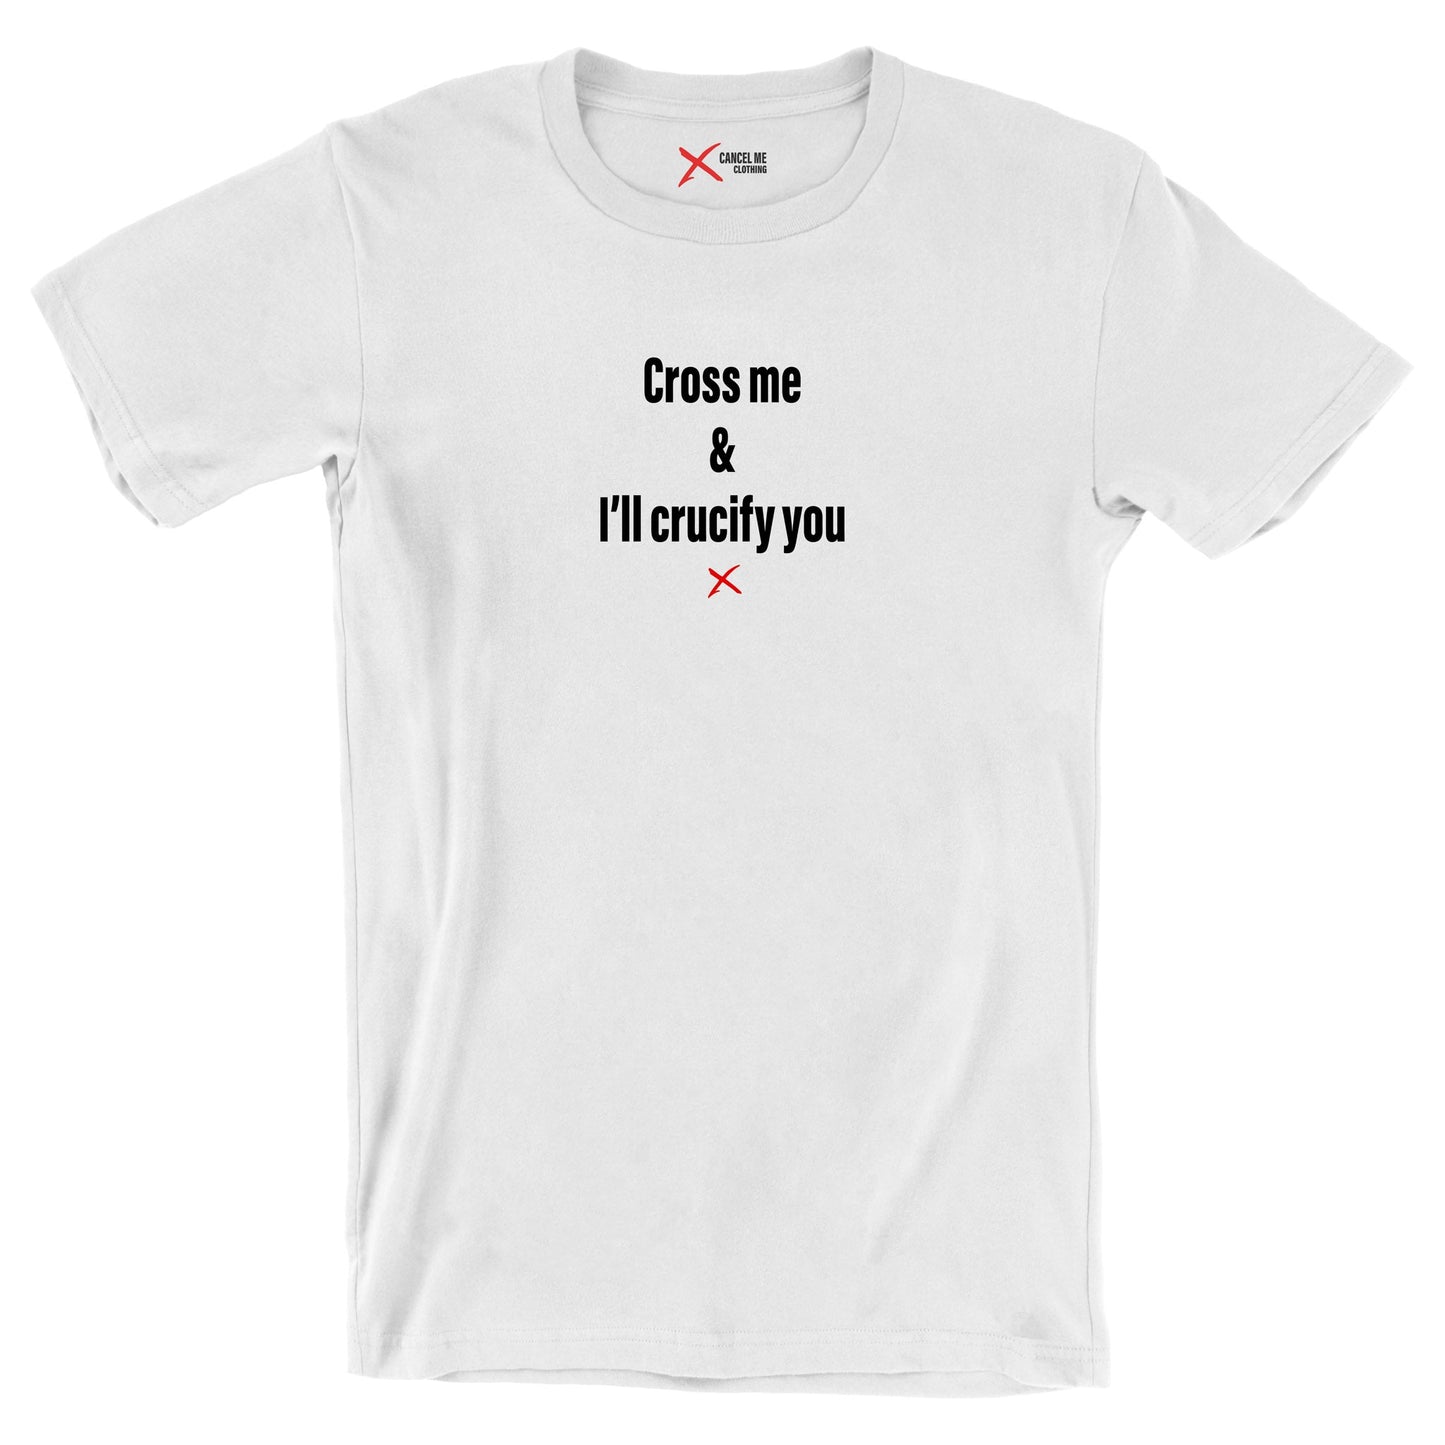 Cross me & I'll crucify you - Shirt